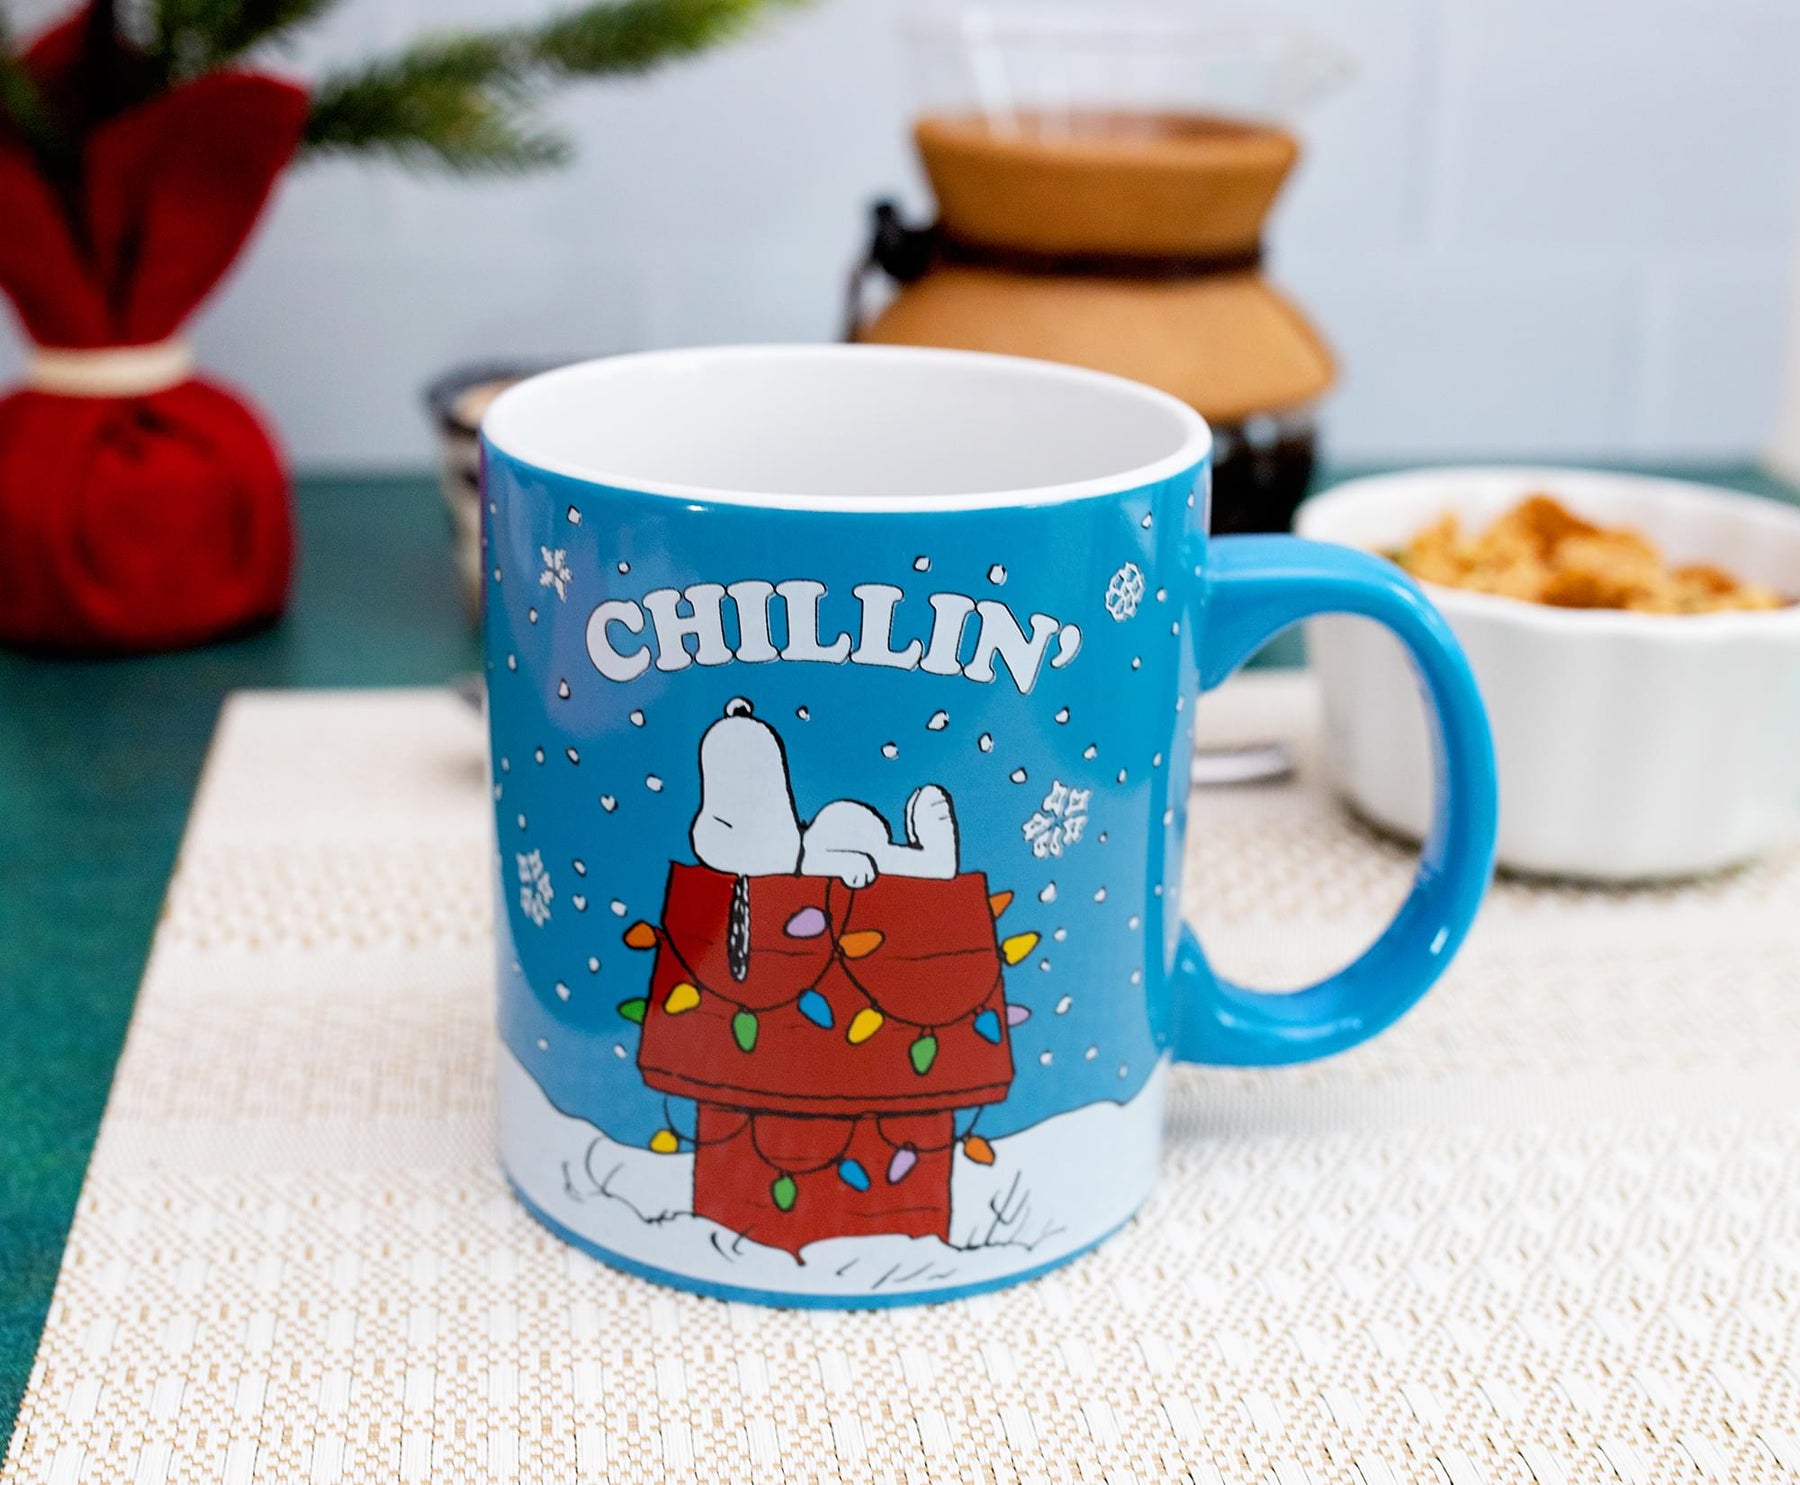 Peanuts Snoopy "Chillin" Ceramic Mug | Holds 20 Ounces